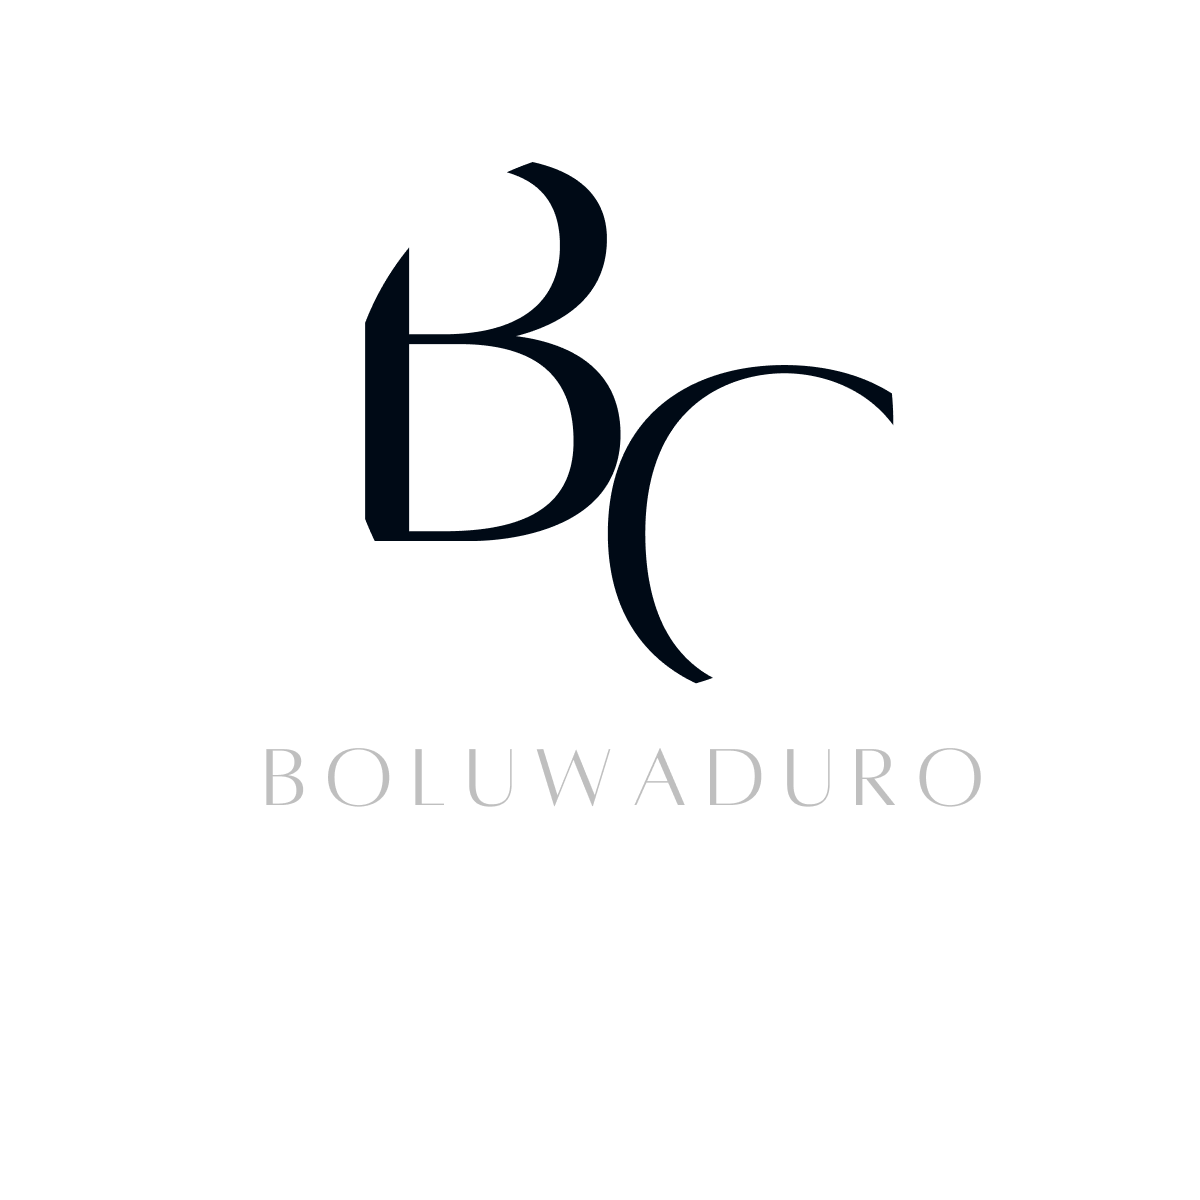 Boluwaduro’s Newsletter